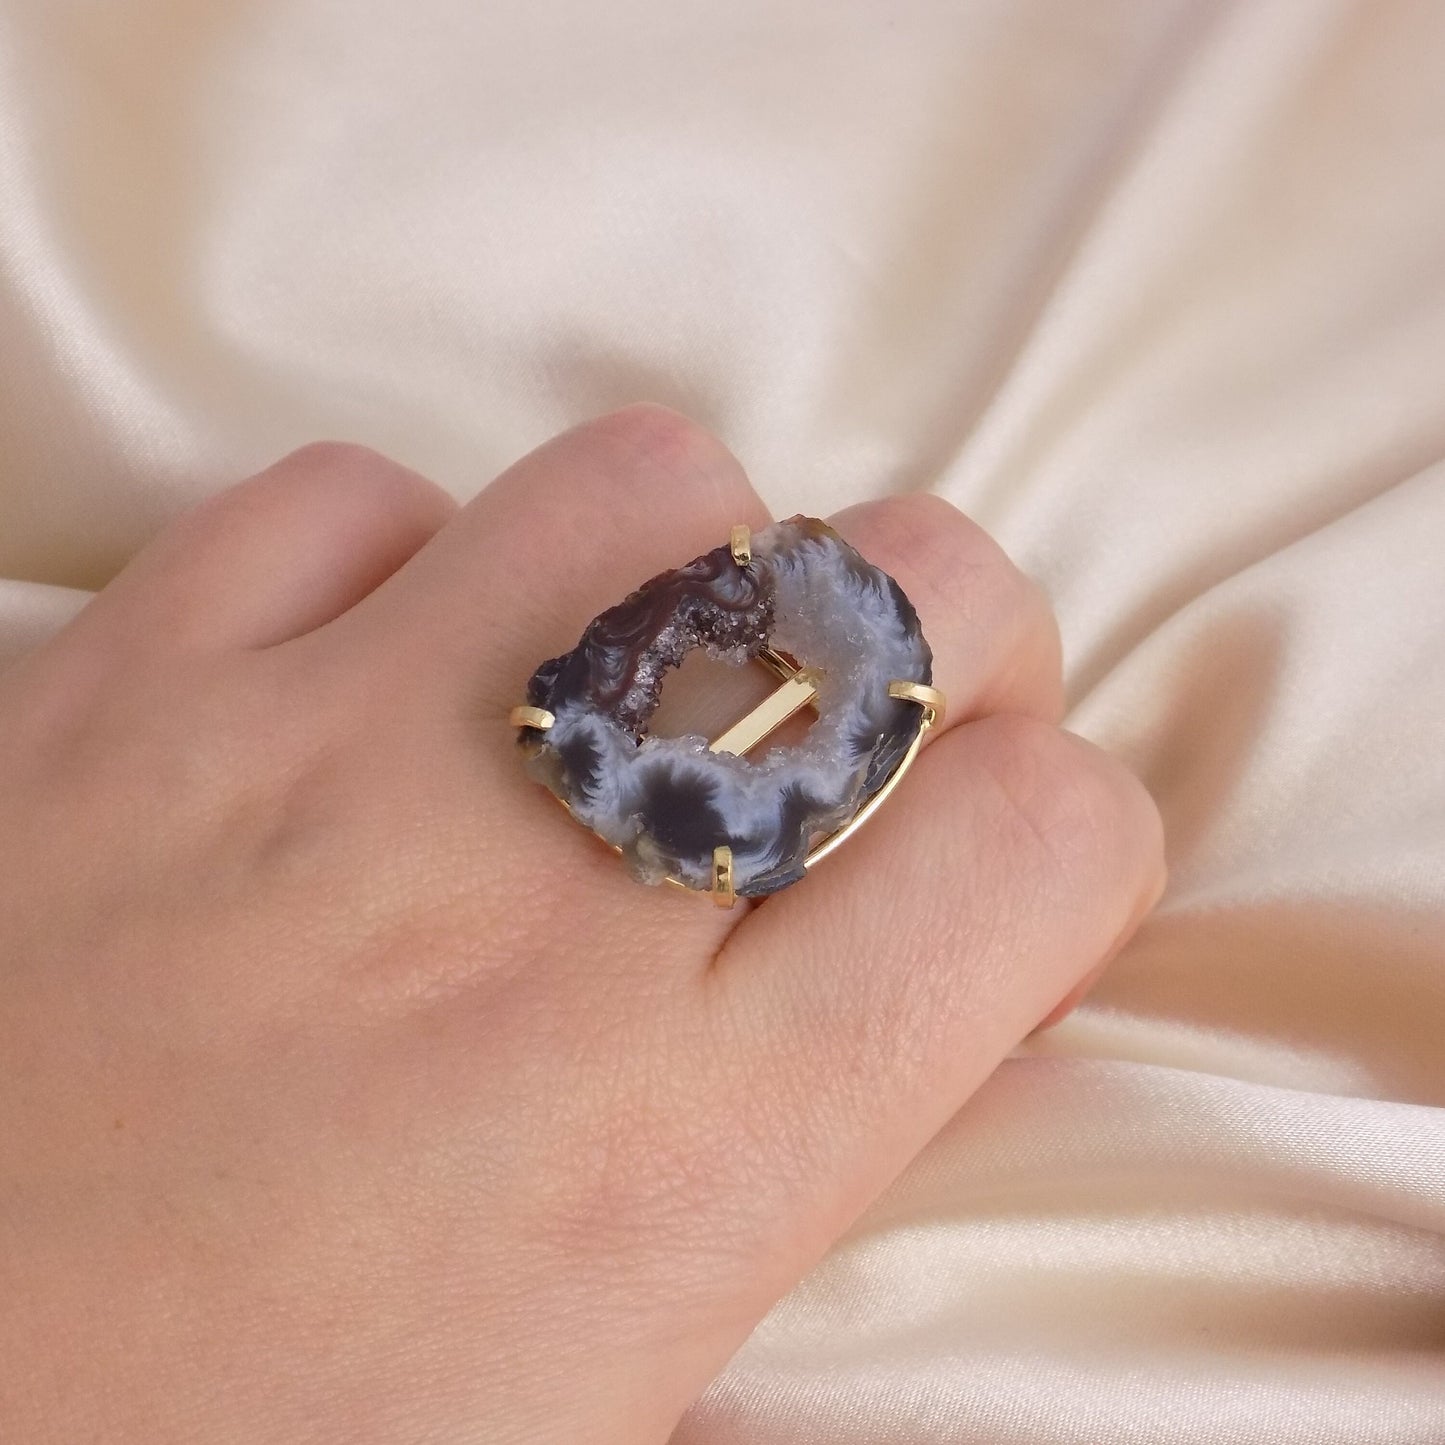 Geode Slice Ring Gold - Adjustable Crystal Rings For Women - Christmas Gift - G15-241